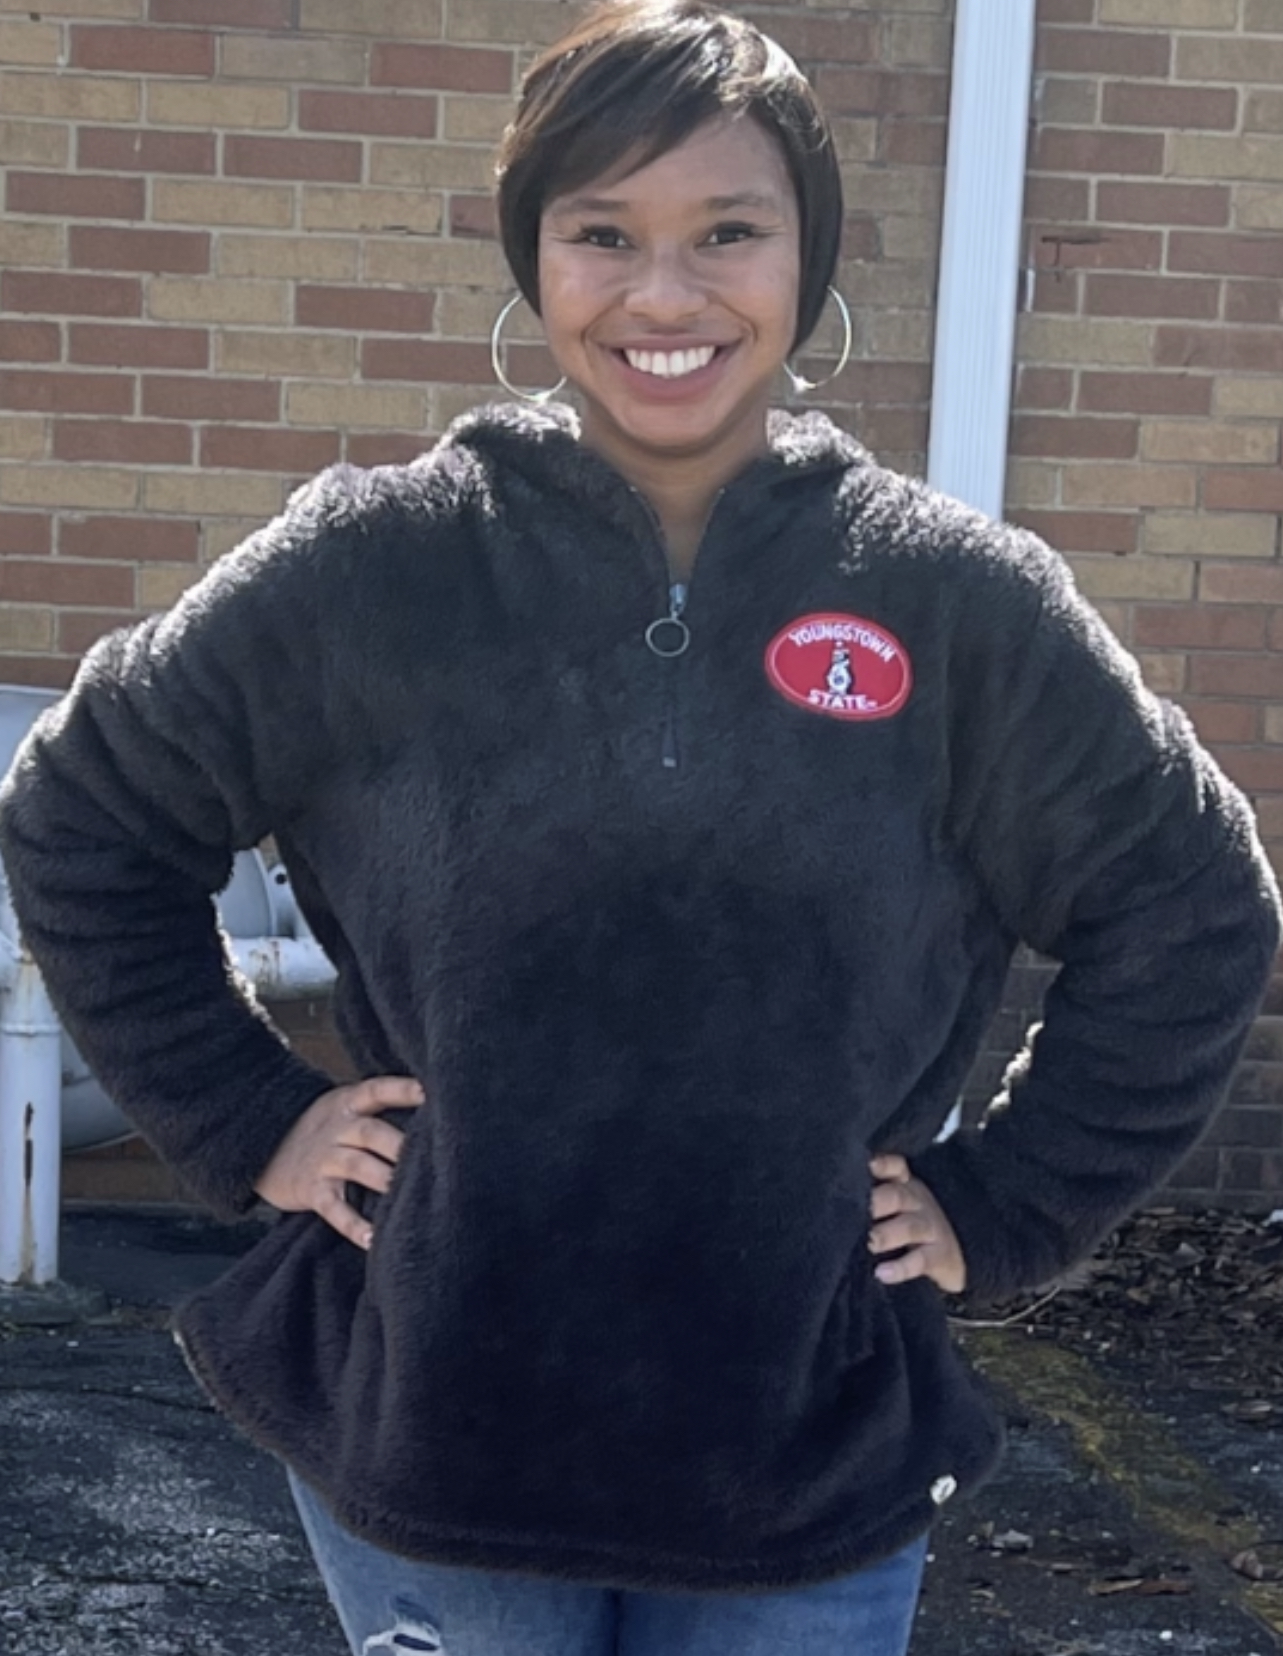 Gabrielle smiling, wearing a YSU hoodie